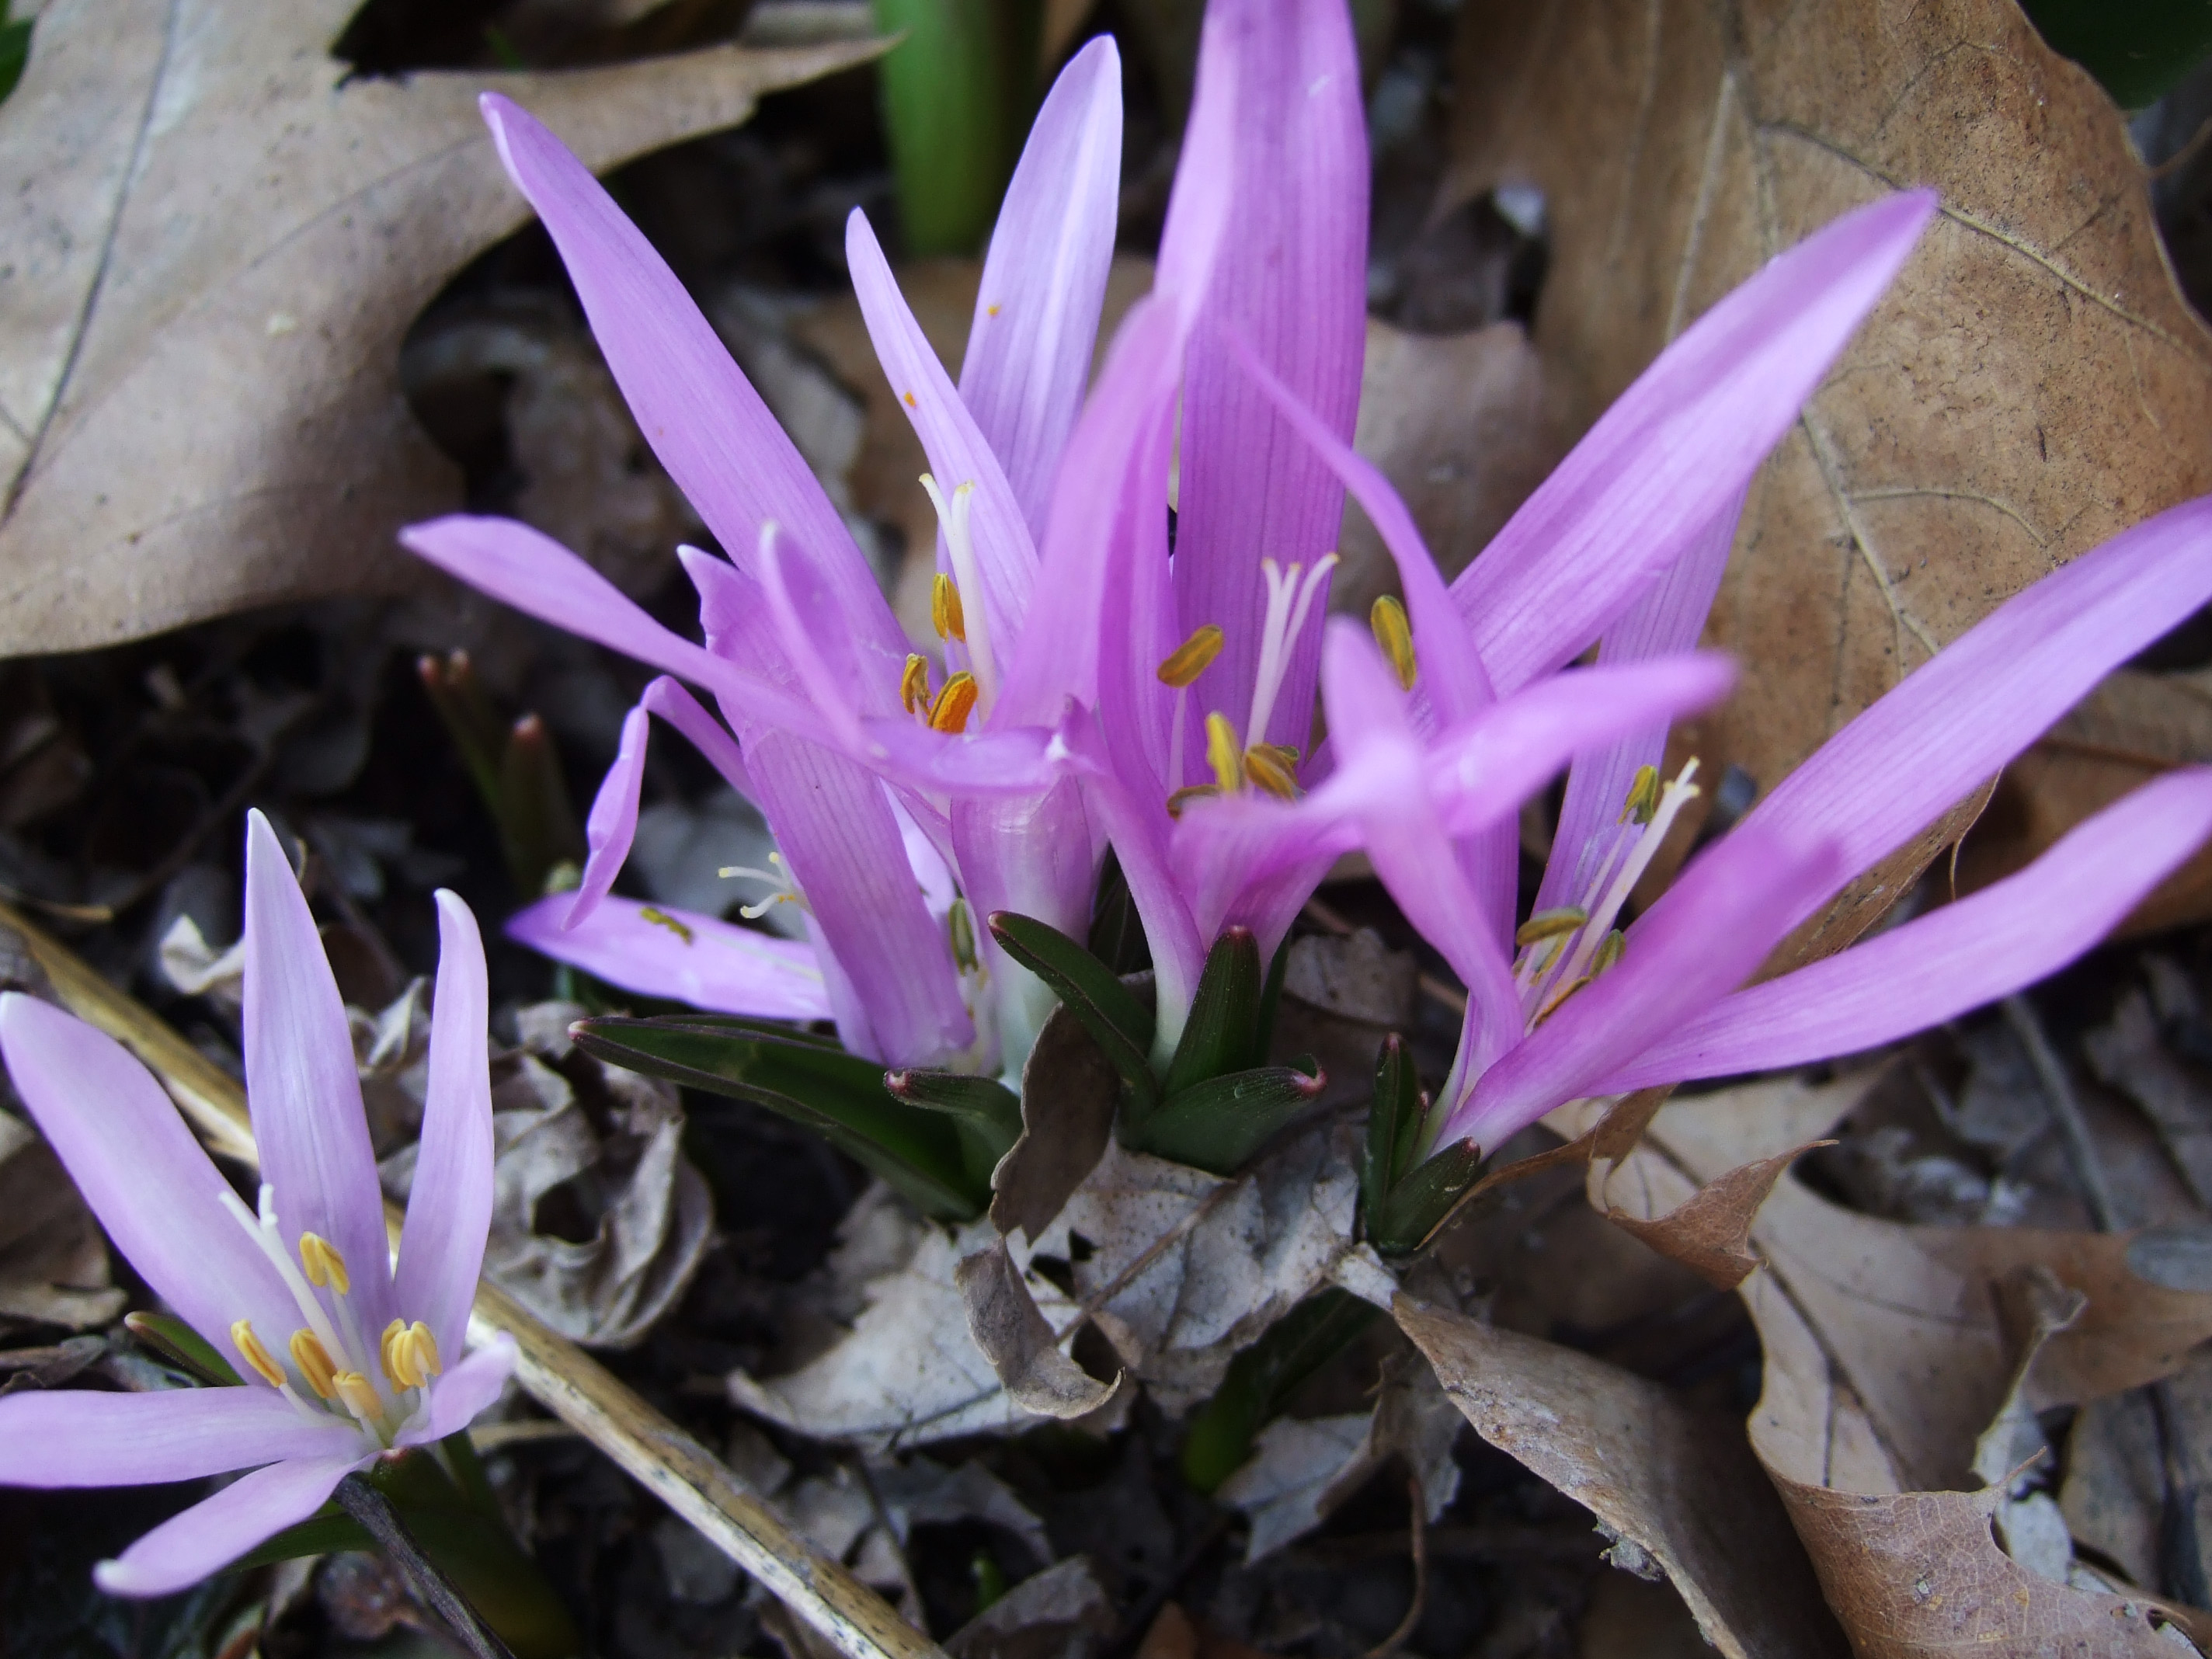 Bulbocode du printemps © Par James Steakley, https://commons.wikimedia.org/w/index.php?curid=6553493